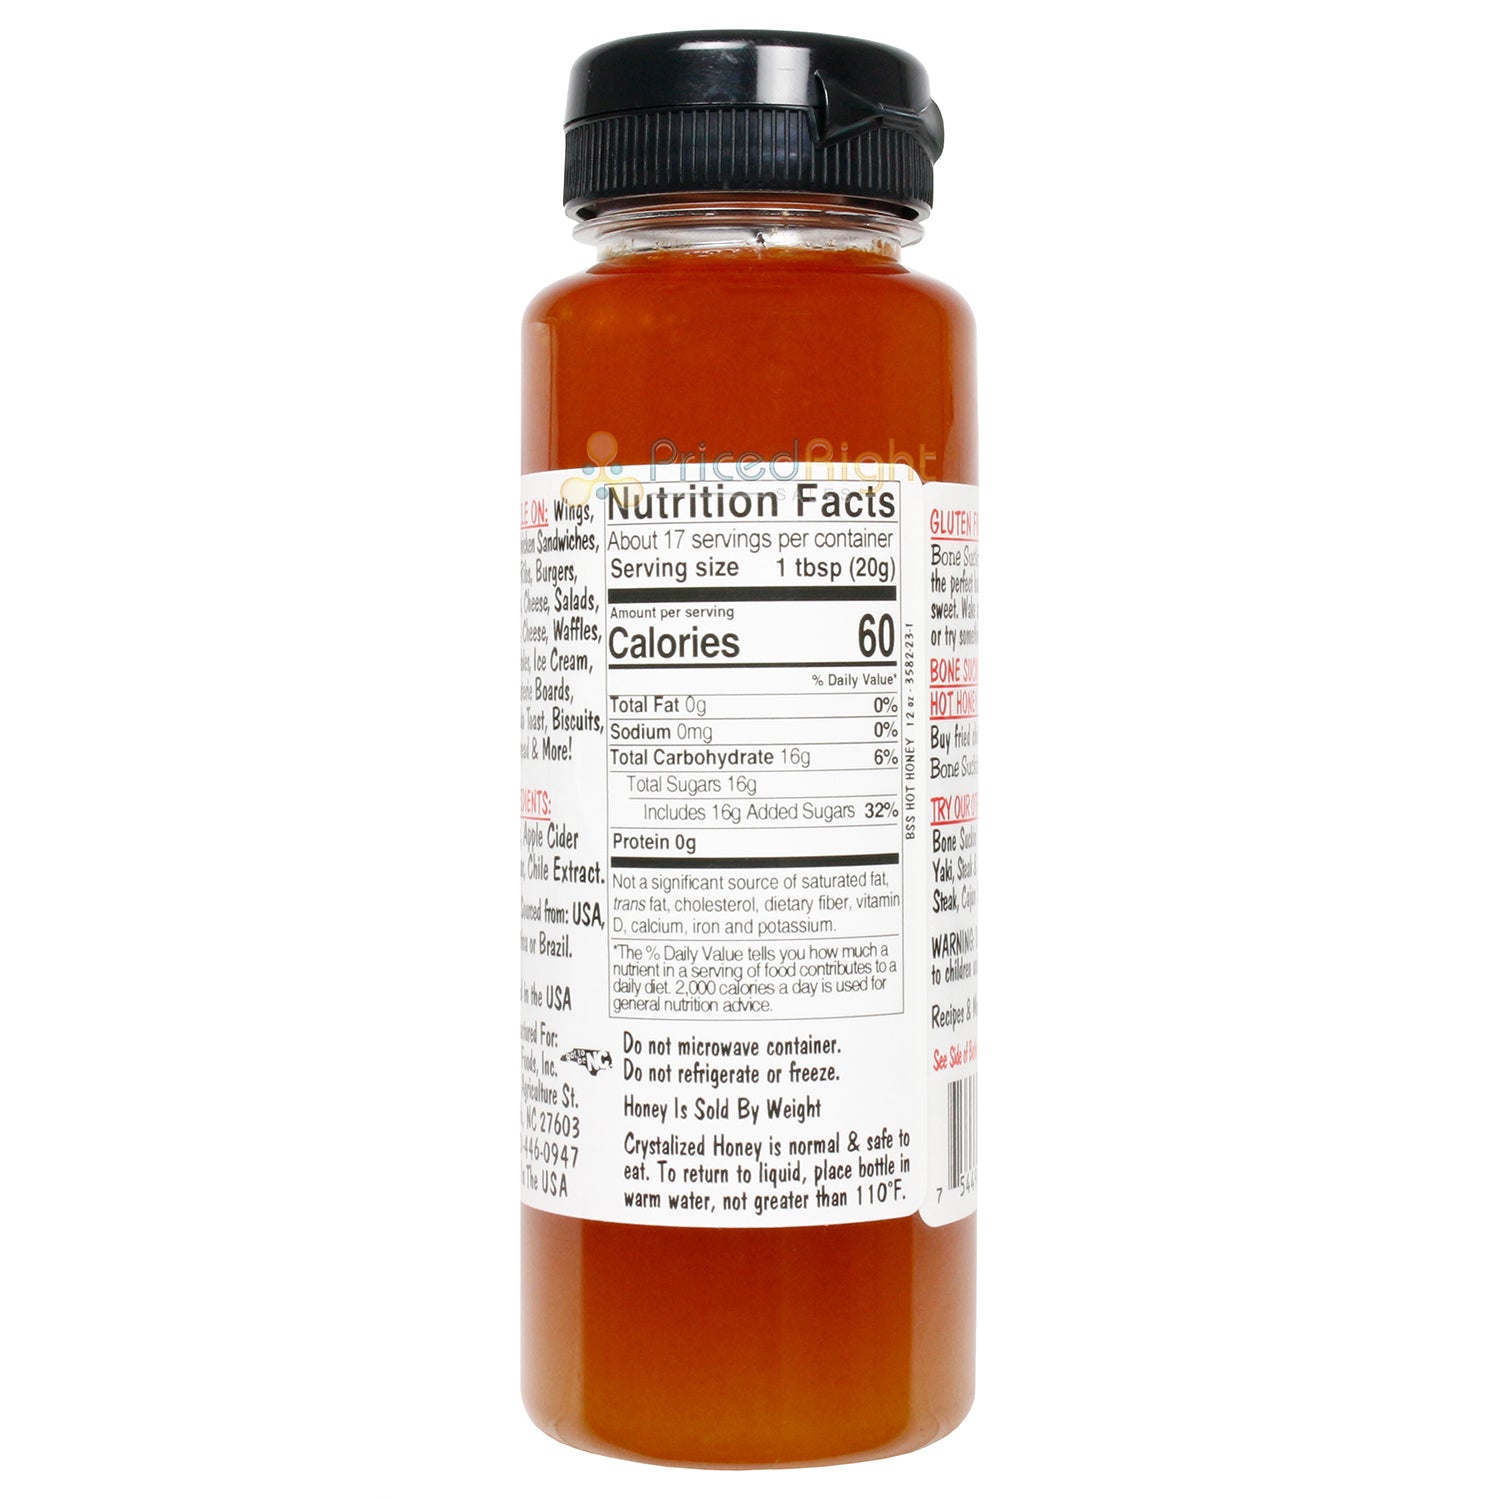 Bone Suckin' Hot Honey Spicy and Sweet Gluten Free Non GMO No HFCS 12 Ounce